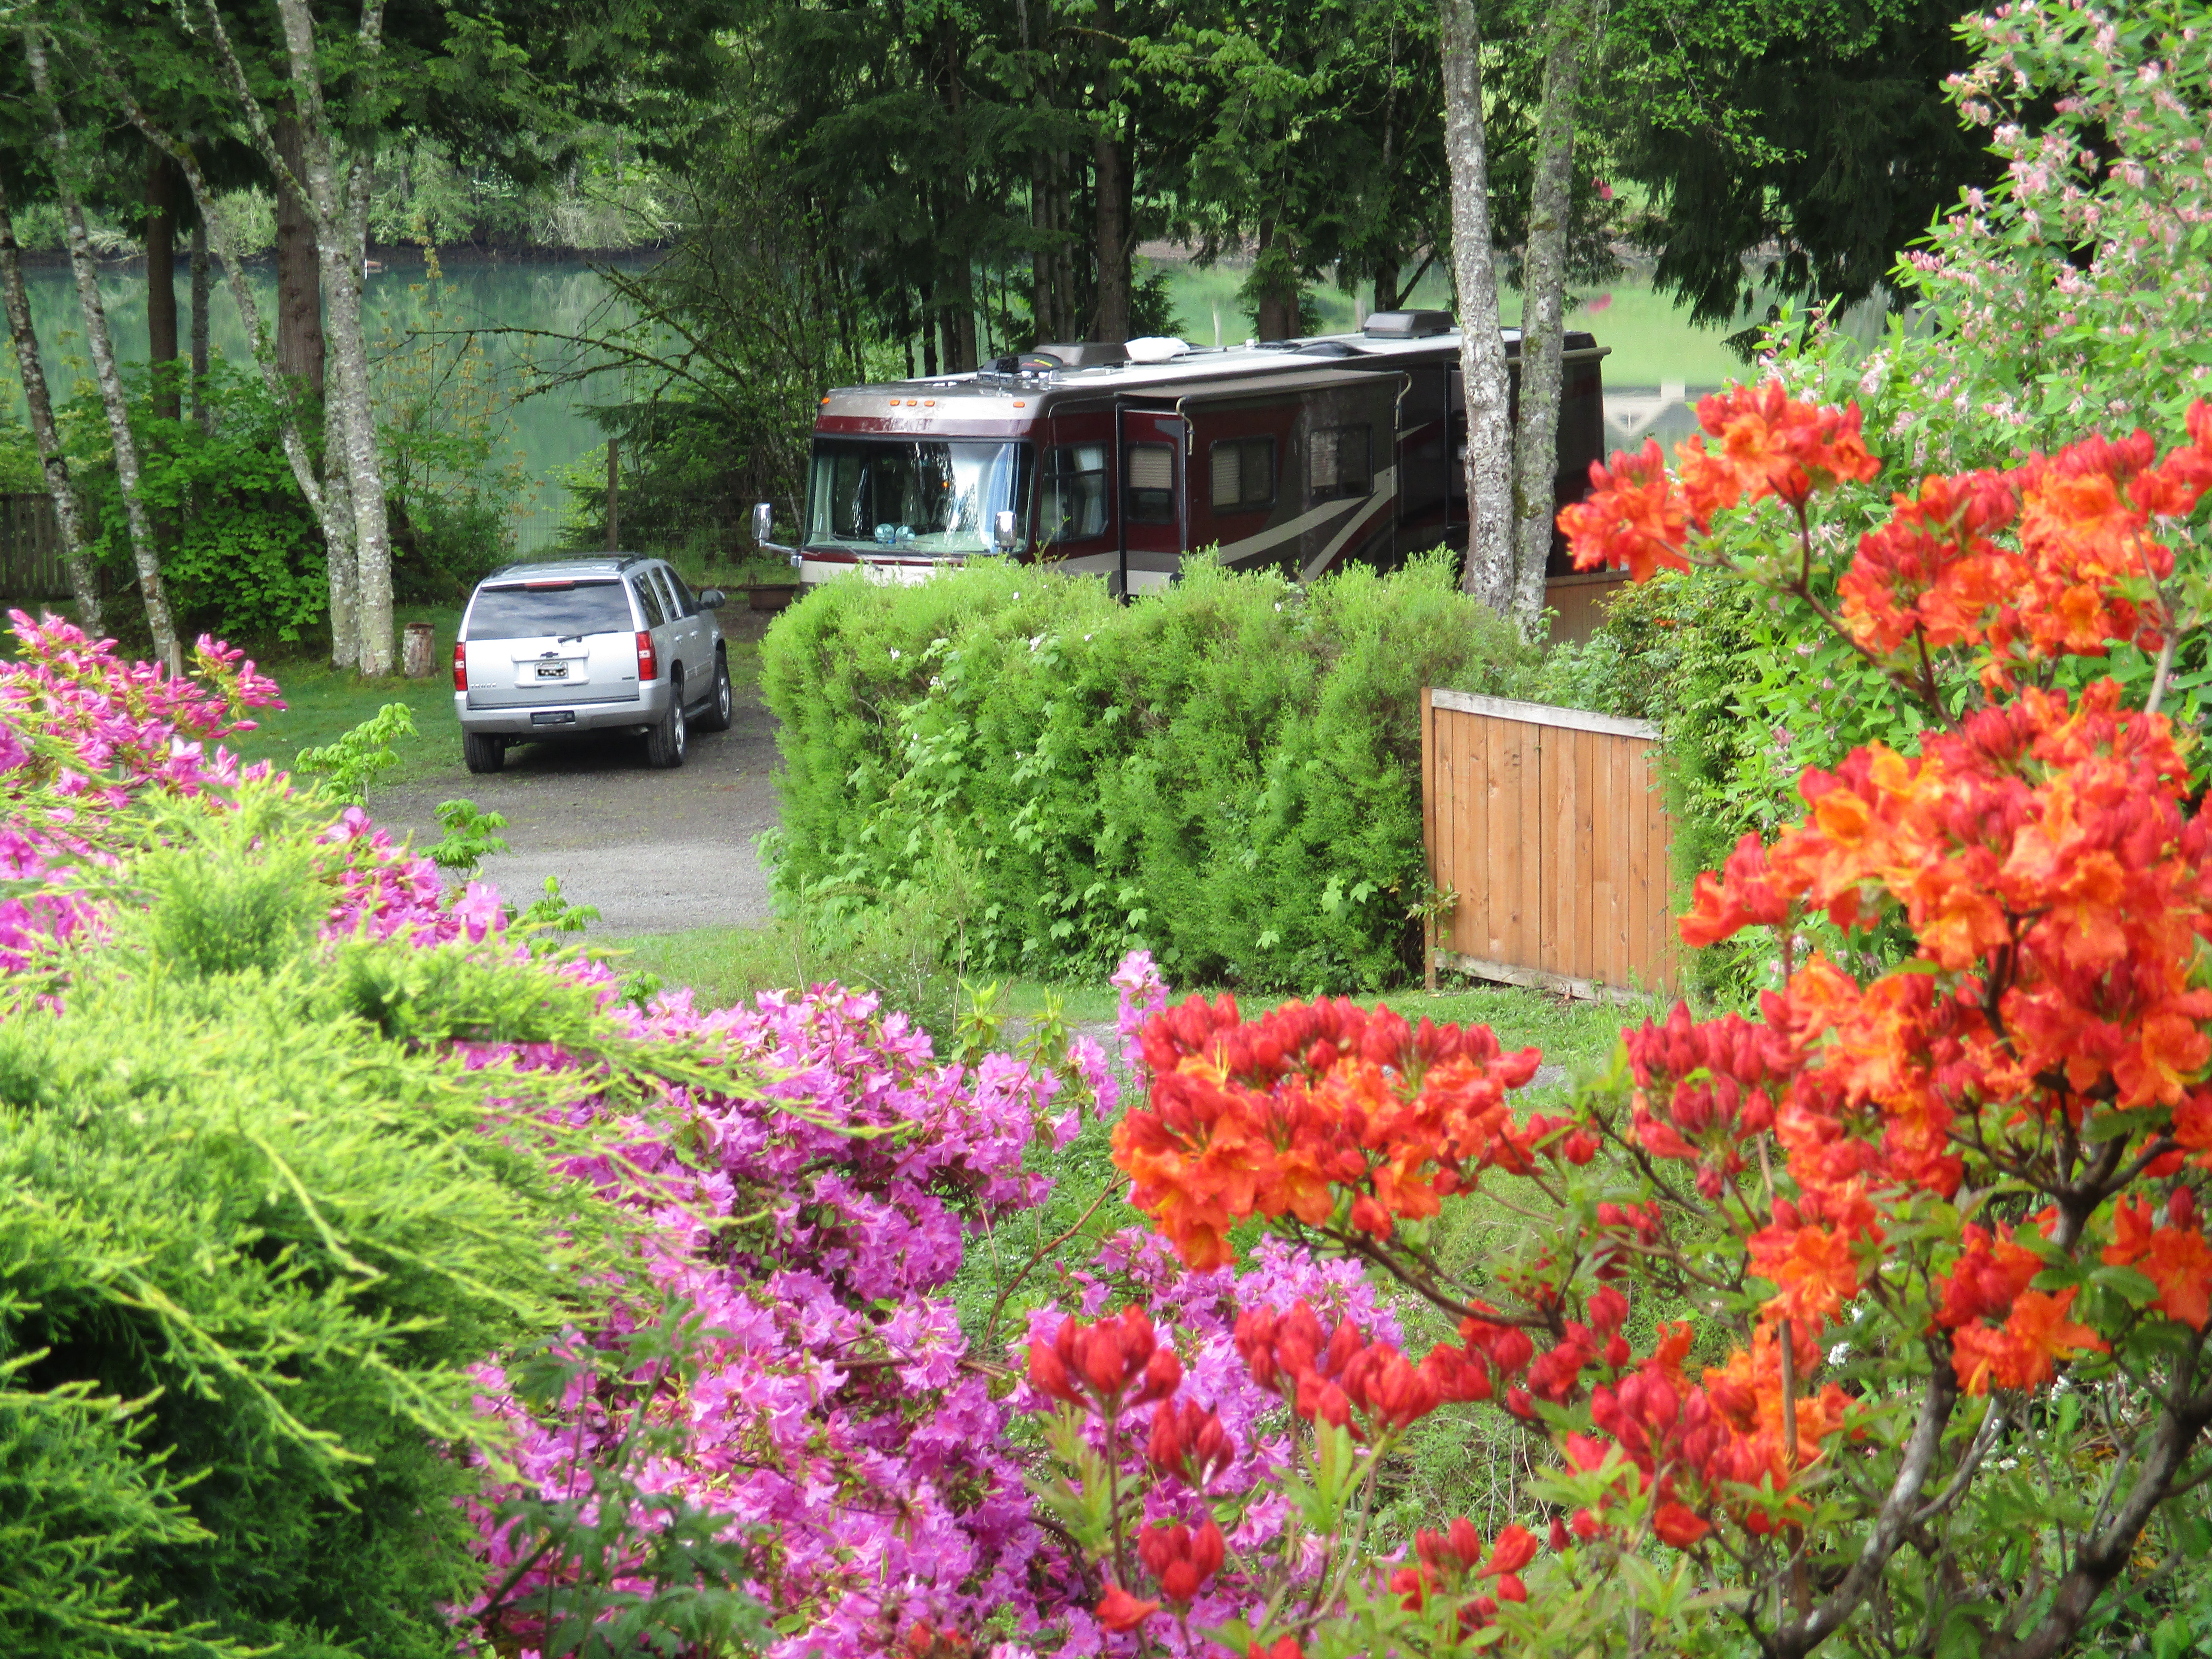 Harmony Lakeside RV & Cabins - Beautiful landscaping